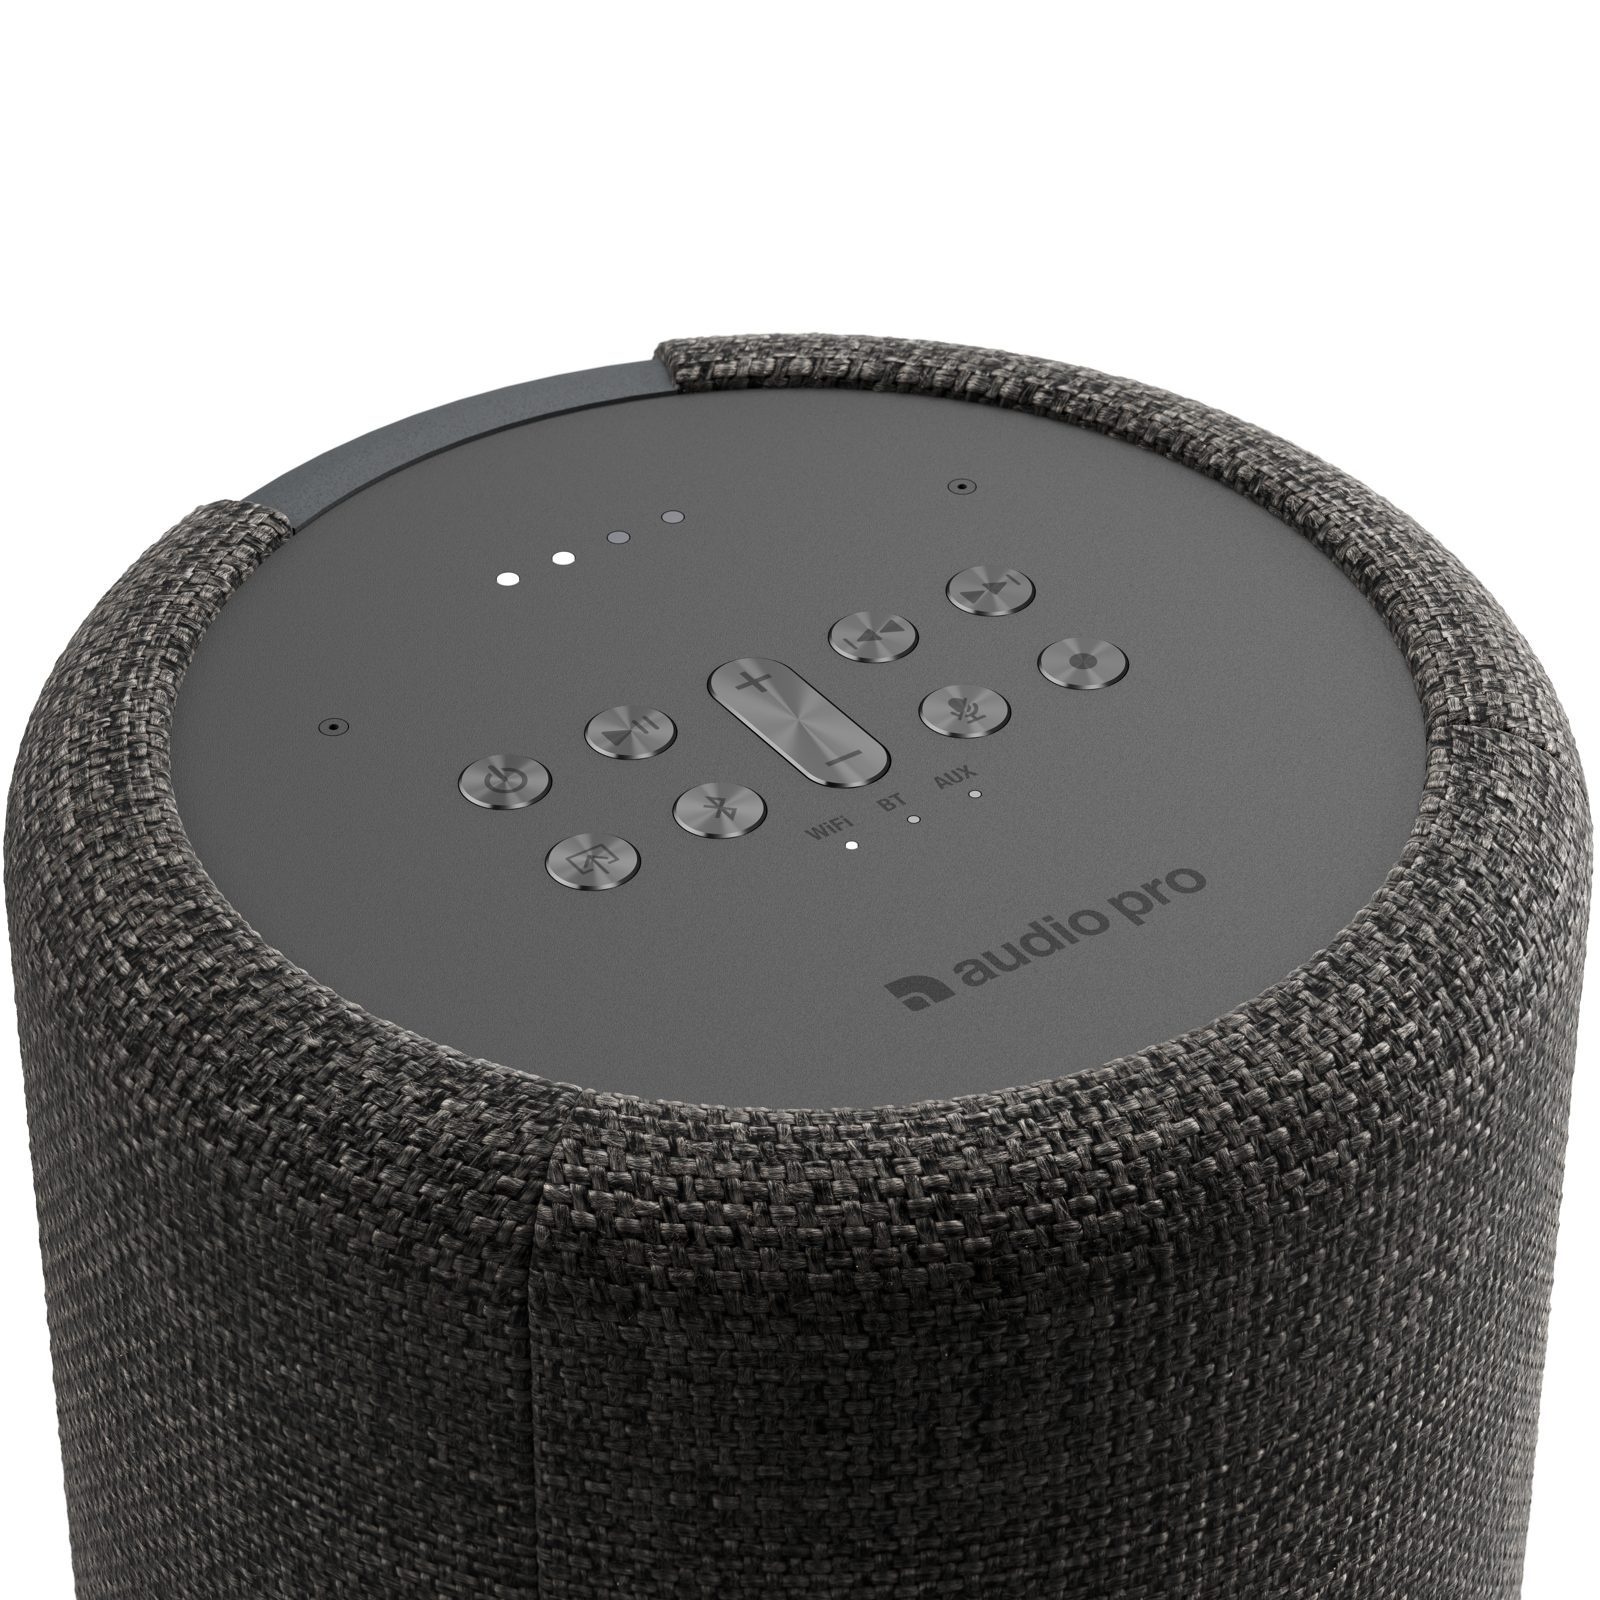 Assistant Home Audio 2 Pro Google Dunkelgrau Lautsprecher Speaker AirPlay & Smarter